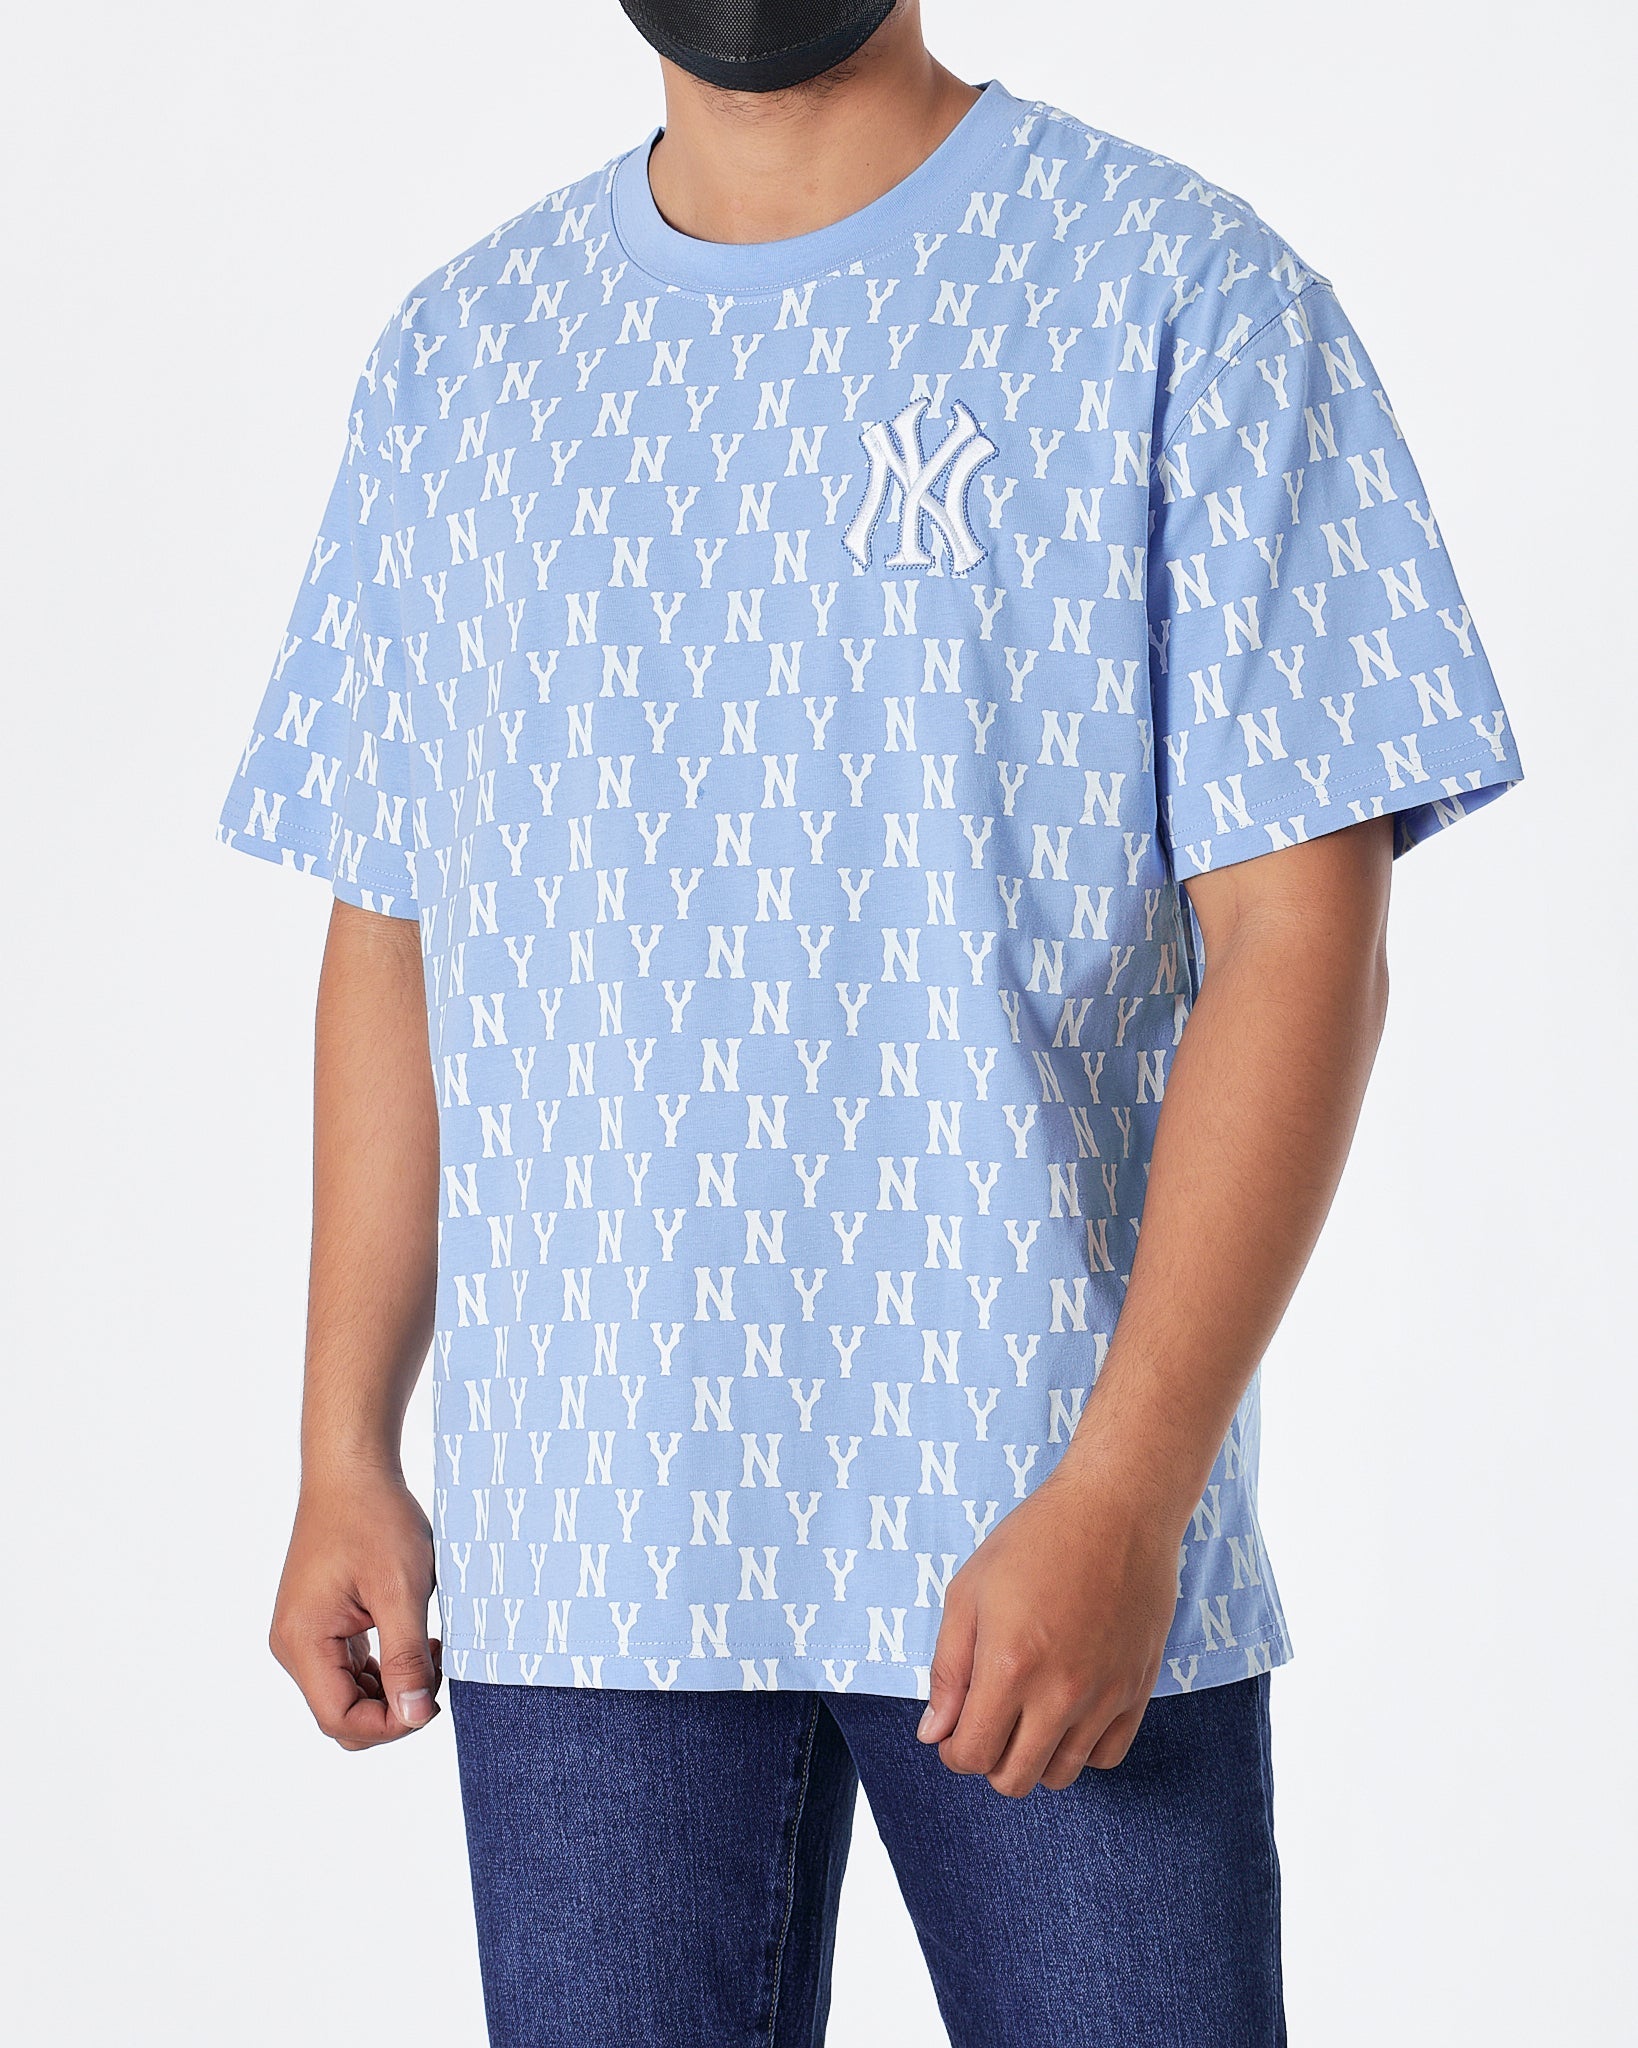 MOI OUTFIT-NY Monogram Unisex Blue T-Shirt 19.90